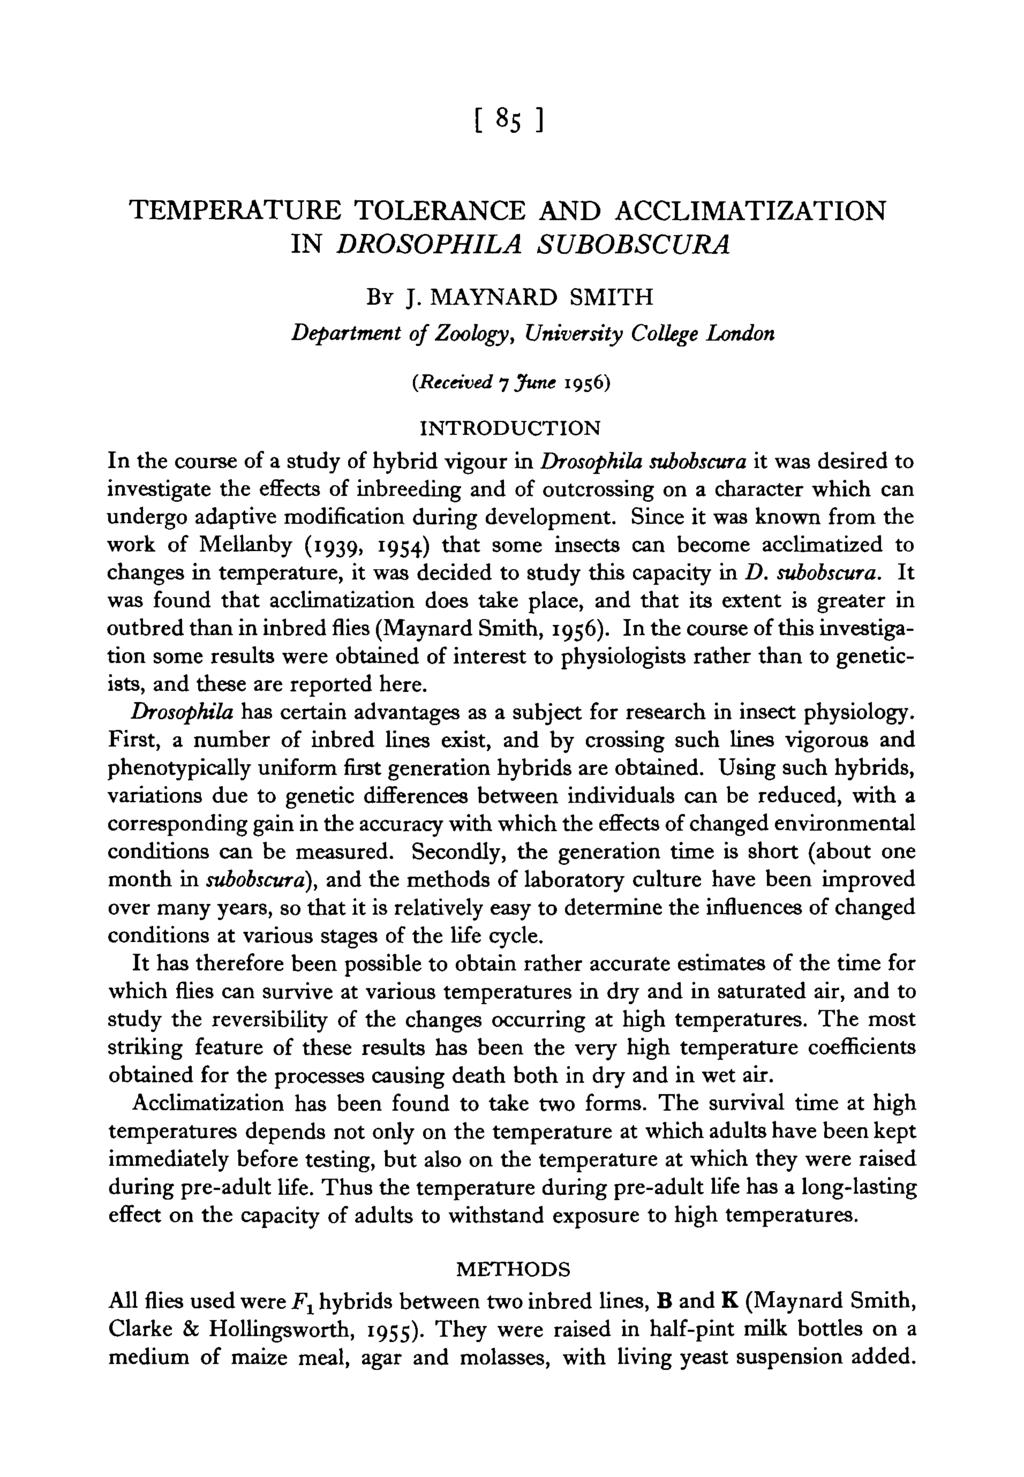 [8 5 TEMPERATURE TOLERANCE AND ACCLIMATIZATION IN DROSOPHILA SUBOBSCURA BY J.